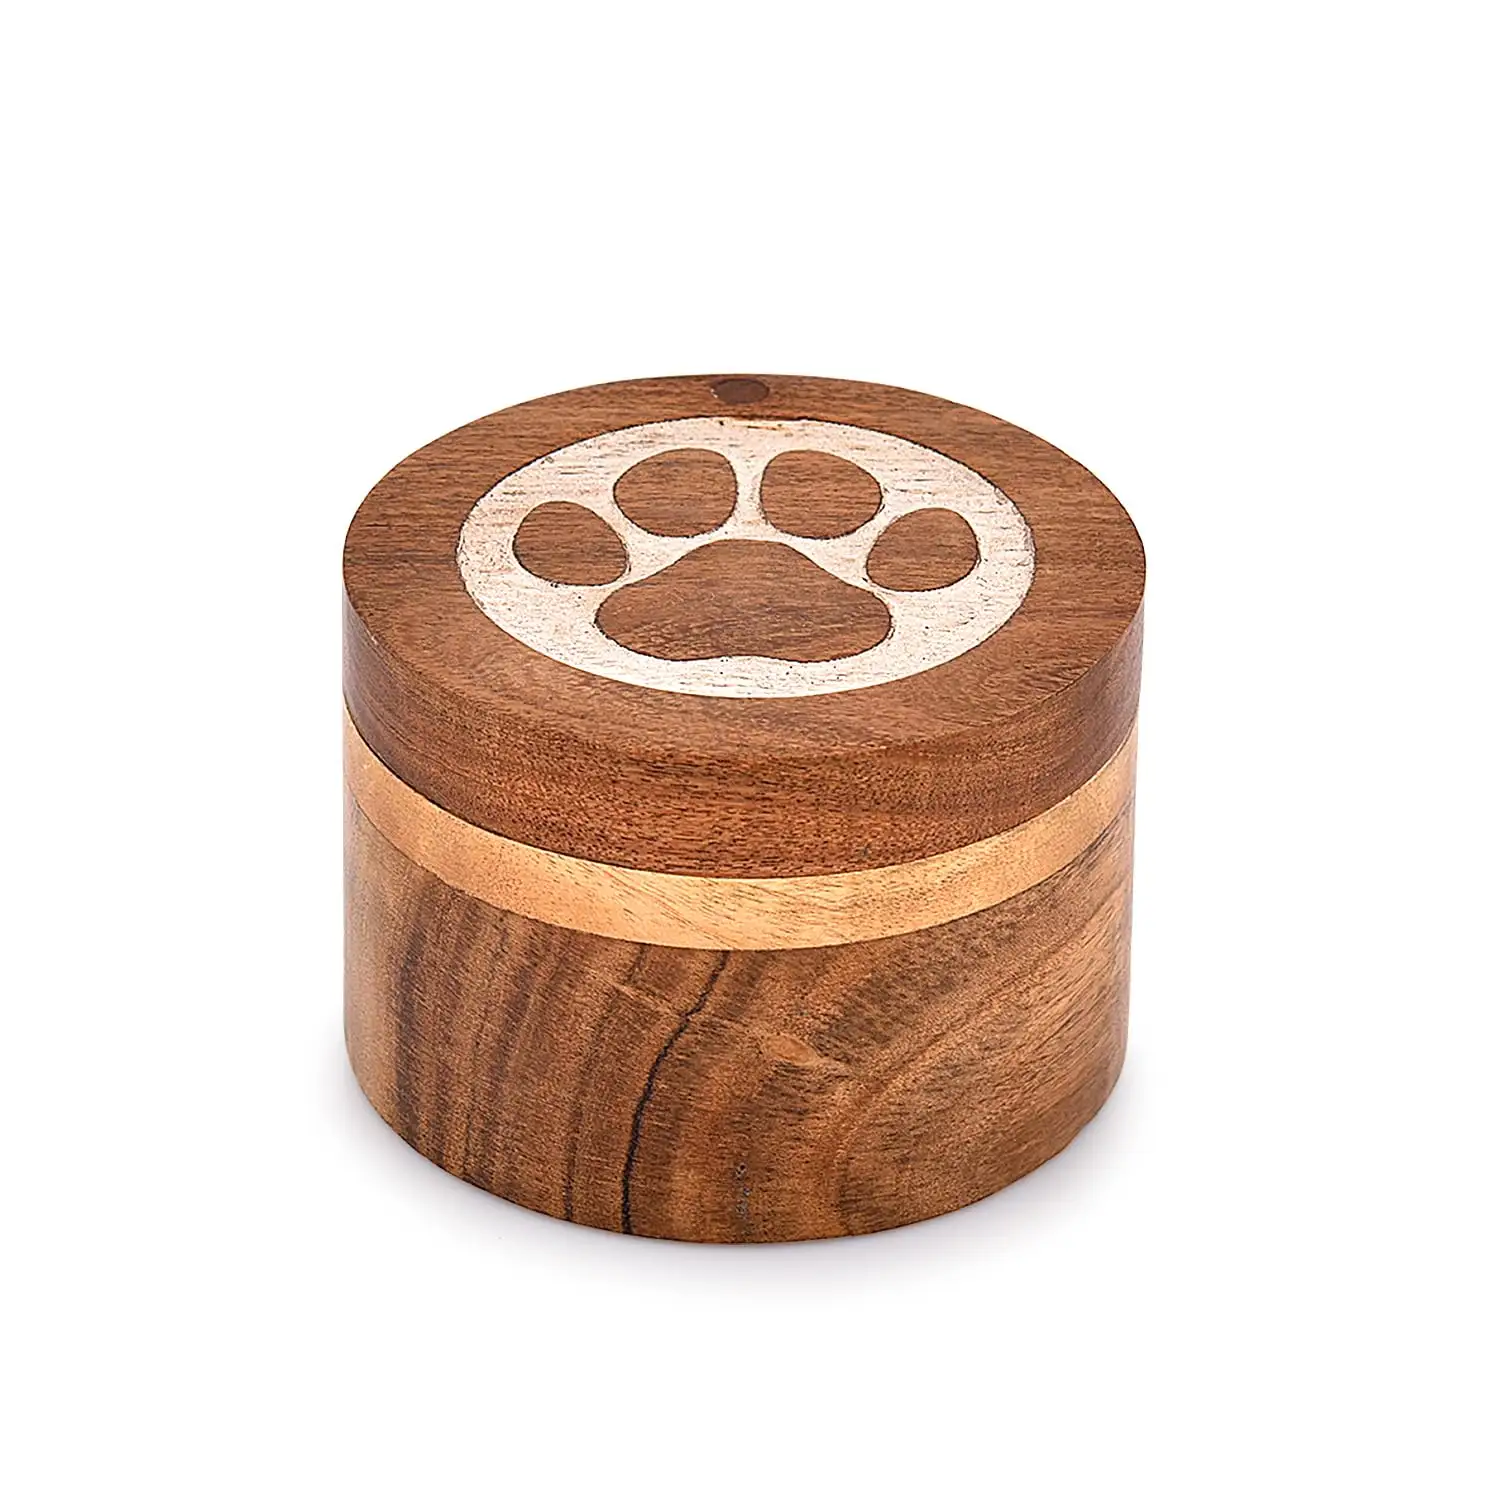 Acacia Wood Decorative Keepsake Box Round Shape White Paws Design Dogs Pet Urns for Cats